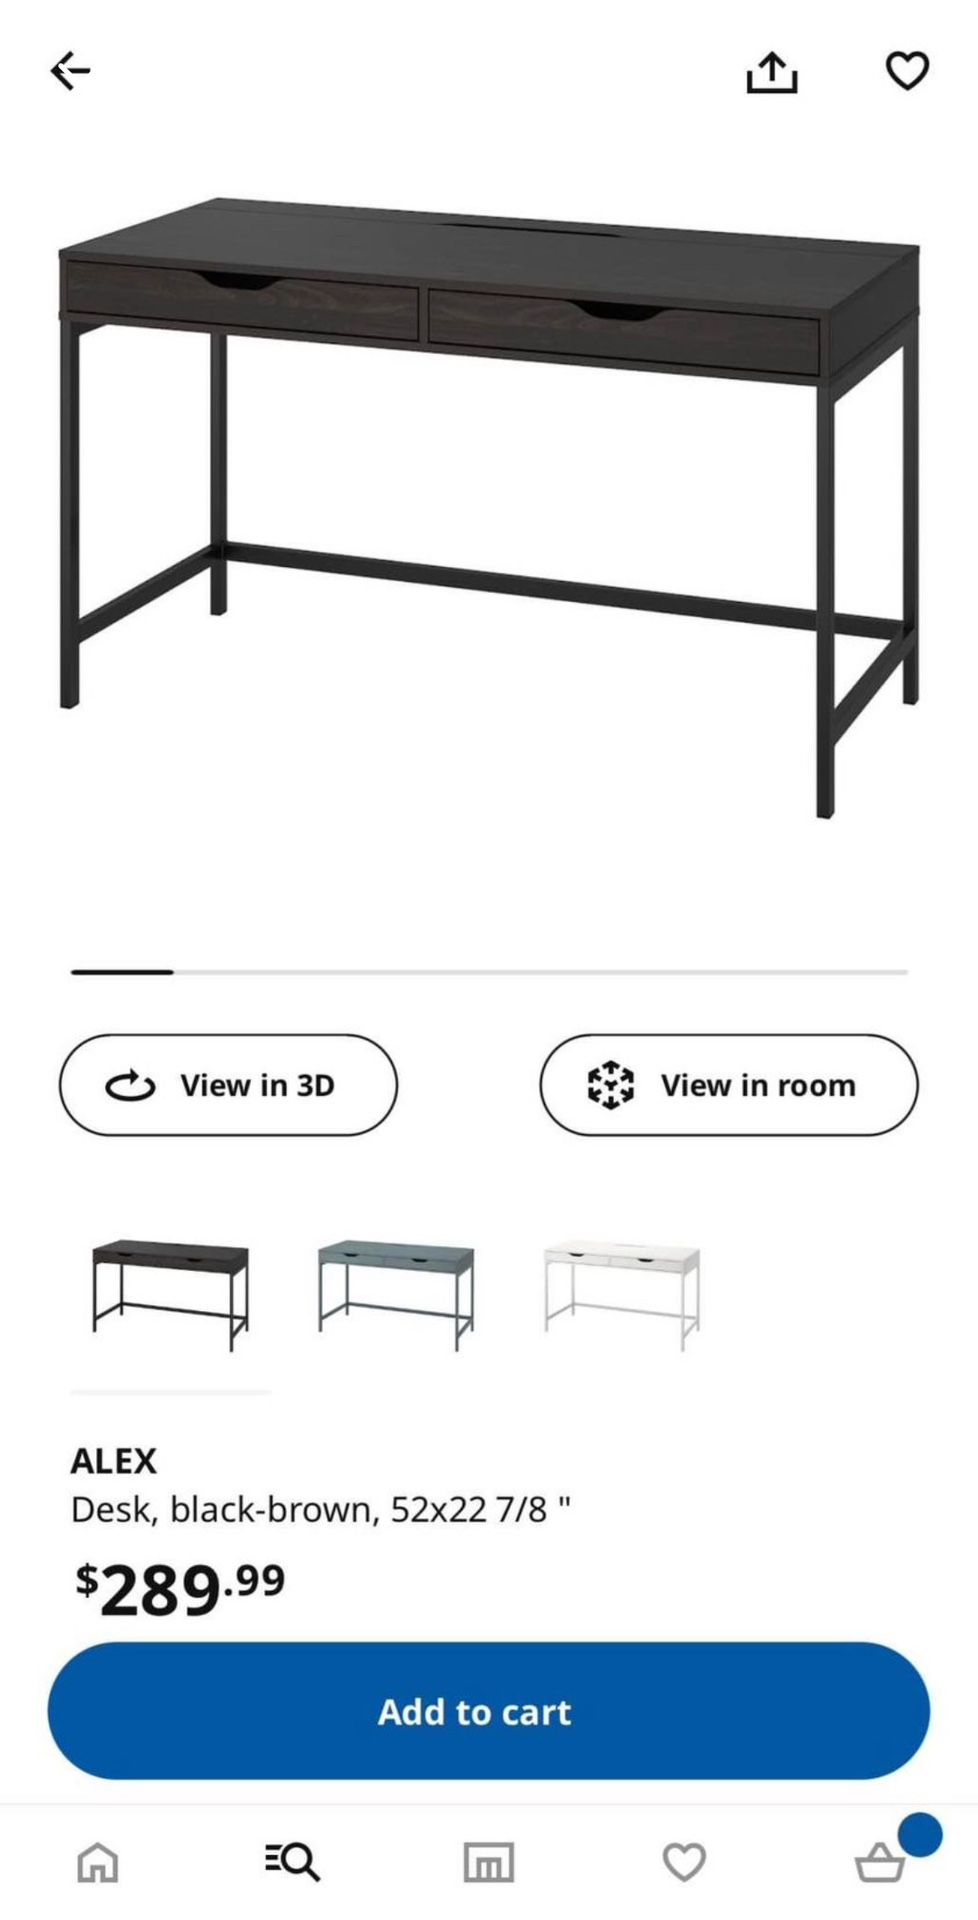 IKEA Alex desk / Vanity / Entry Table 